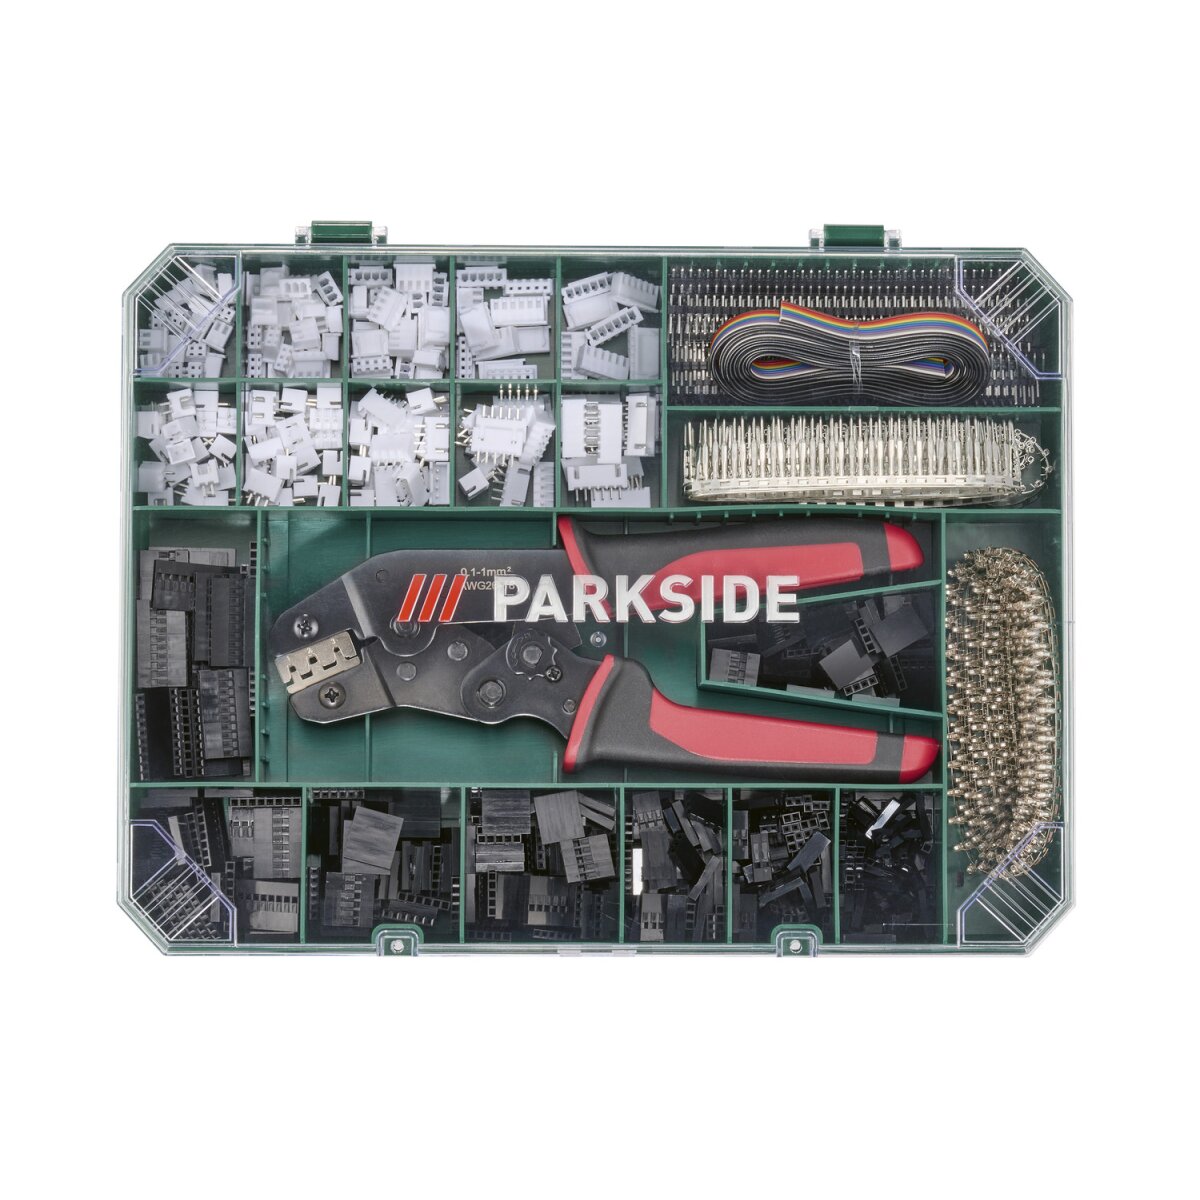 PARKSIDE® Crimpzangen-Set, 2012-teilig € 24,99 B-Ware neuwertig, 